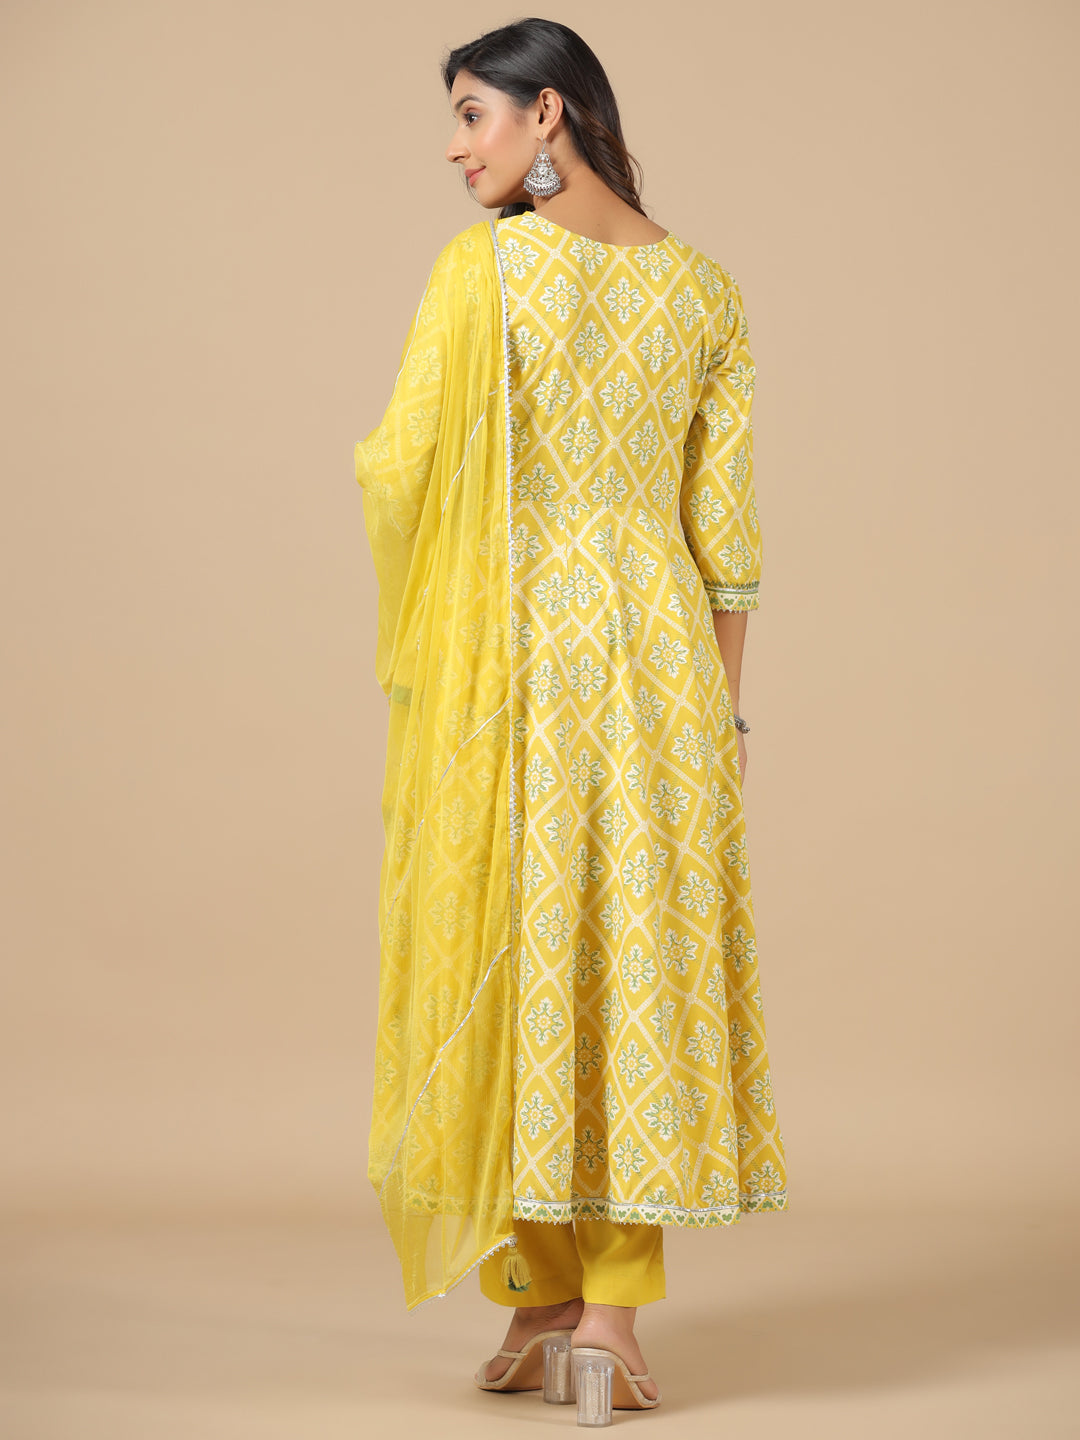 Rayon YellowEmbellished Printed Anarkali Suit Set with Dupatta